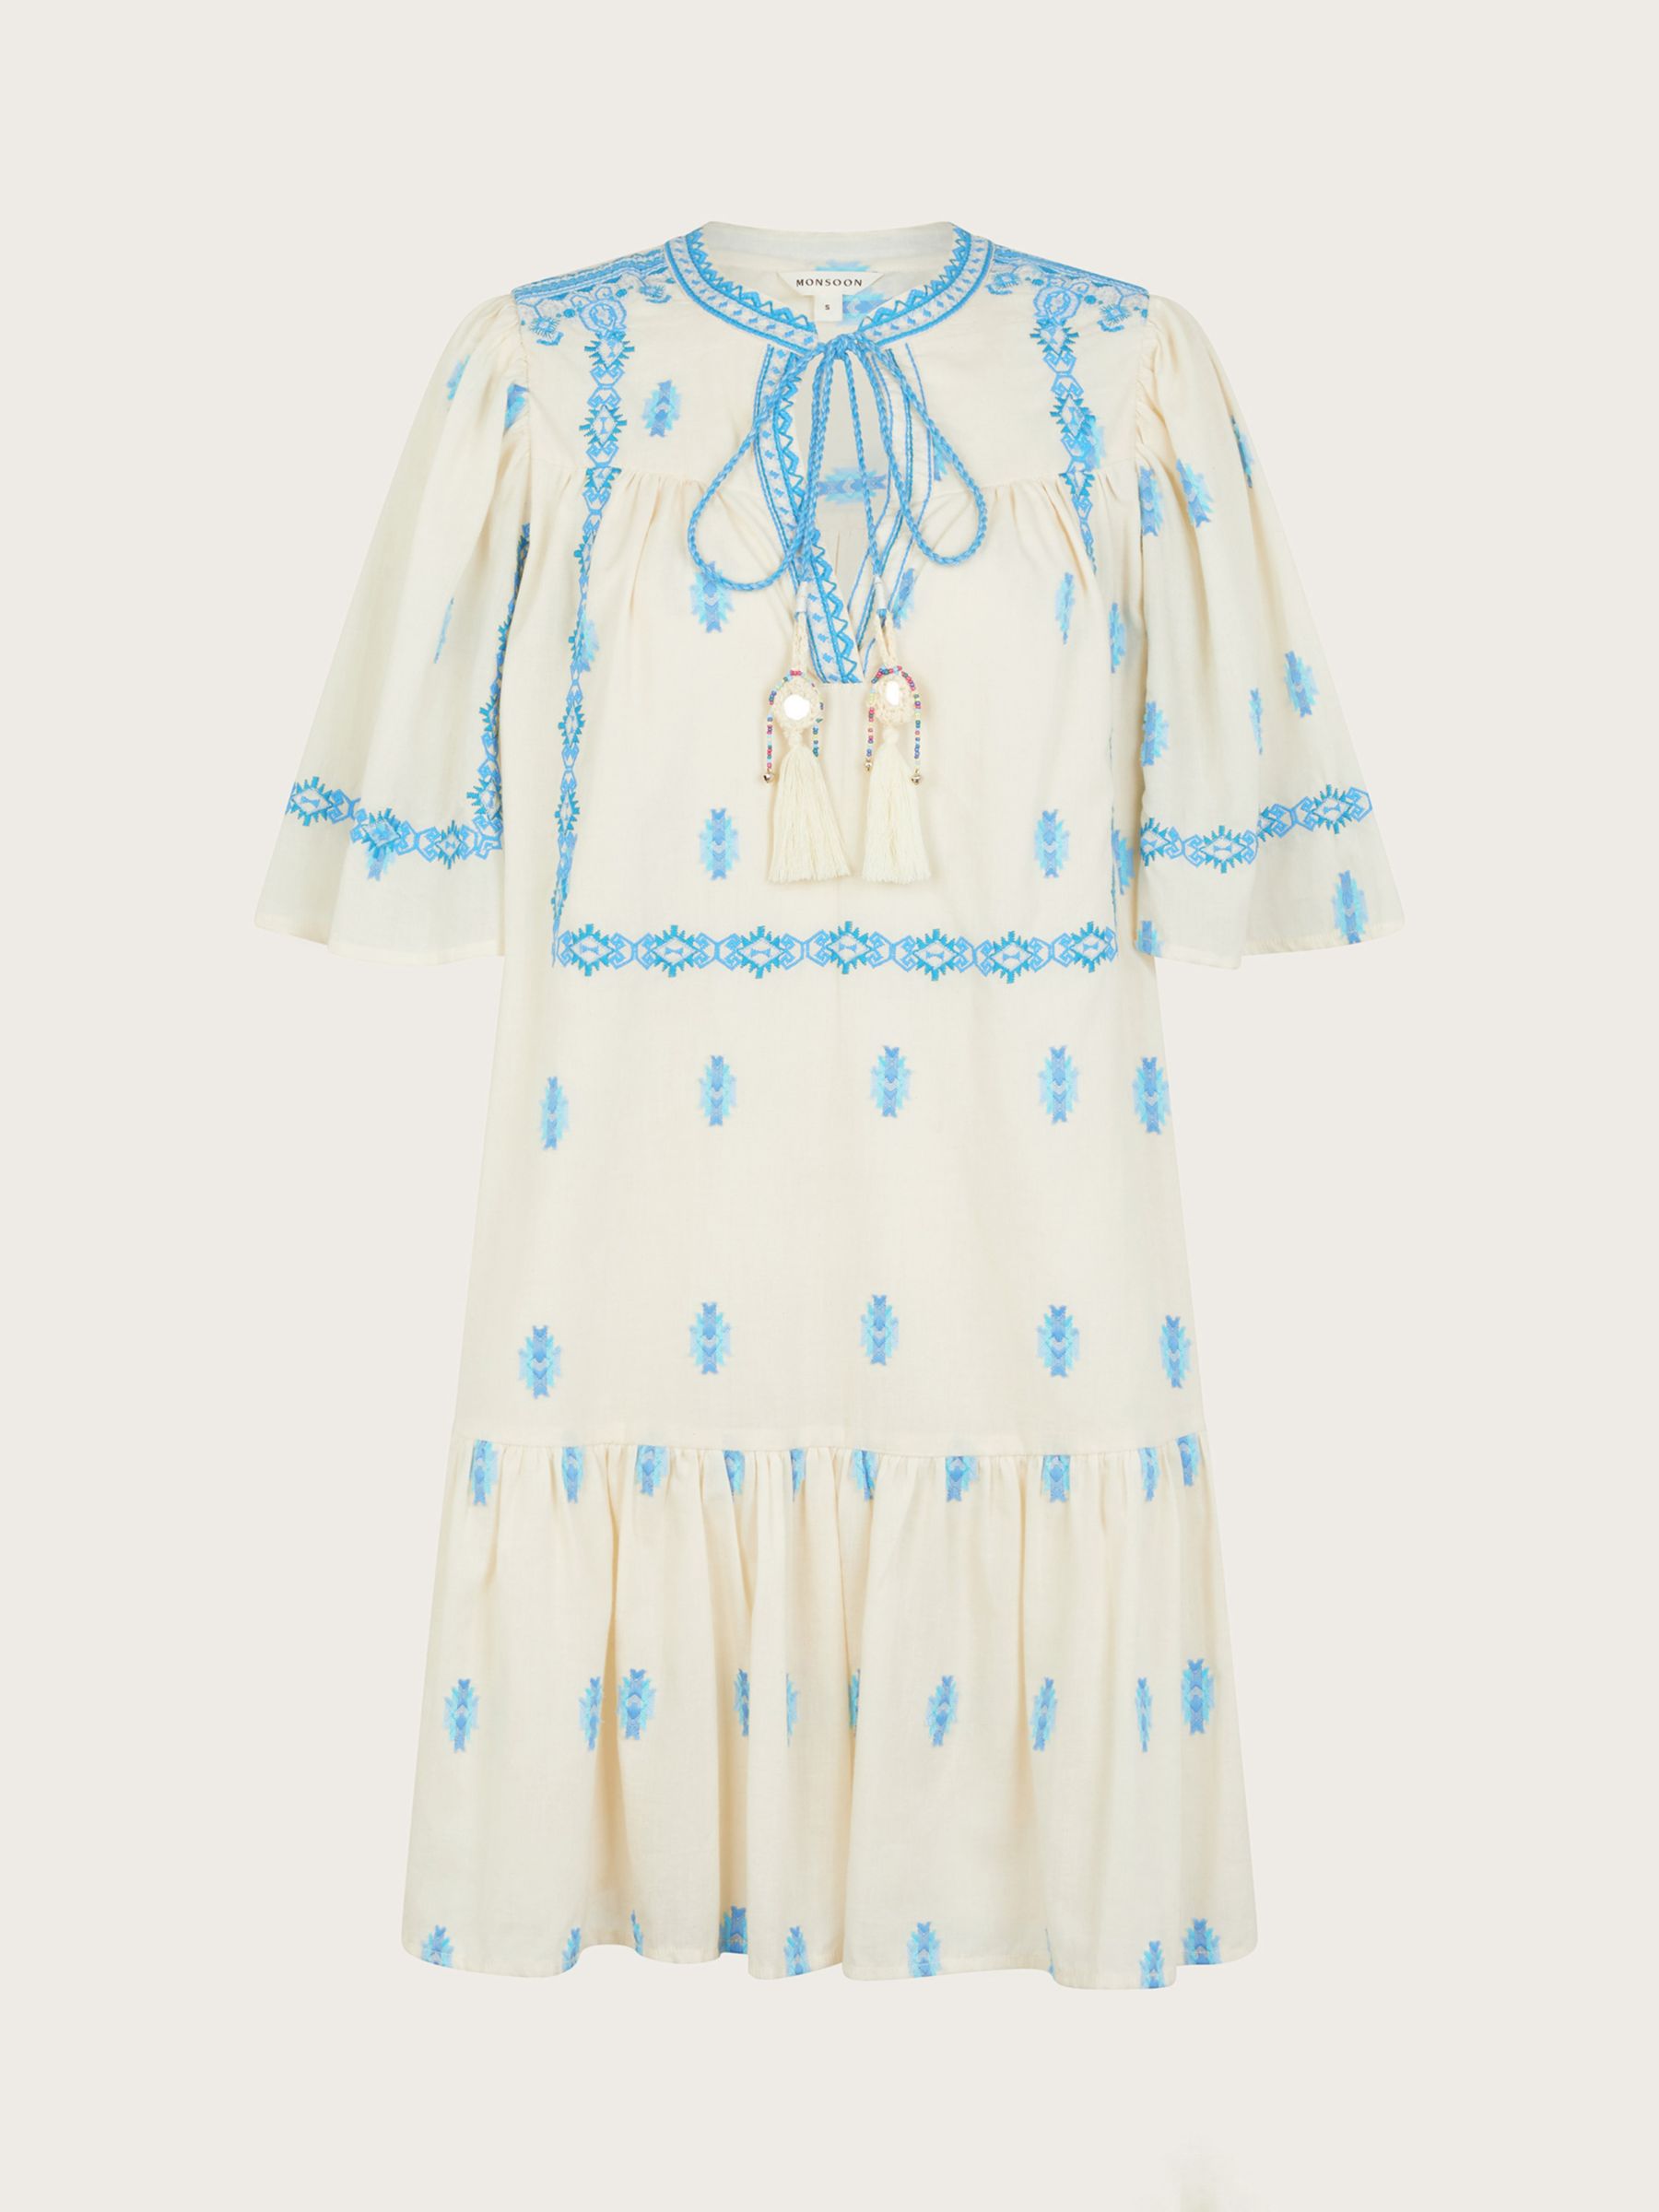 Monsoon Jacinta Embriodered Mini Dress, Ivory/Blue, S